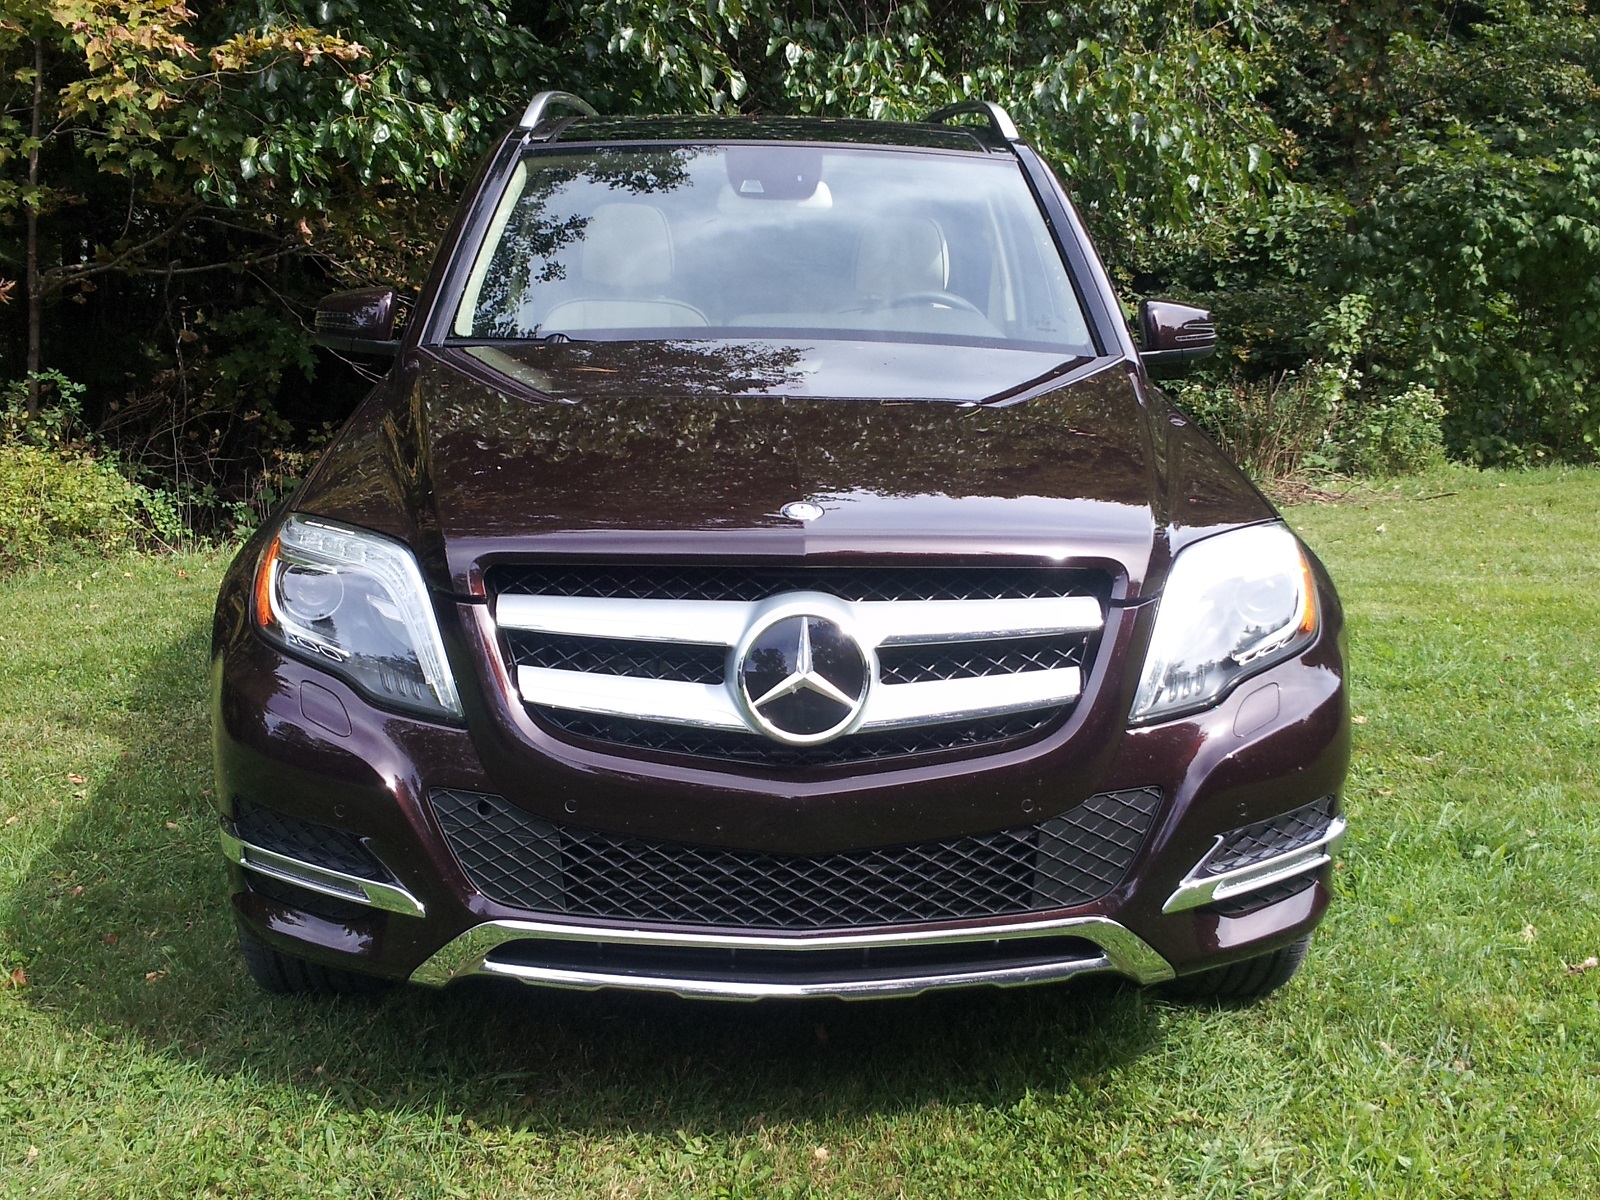 Mercedes-Benz GLK 250 BlueTEC Diesel: Luxury Crossover Fuel Economy